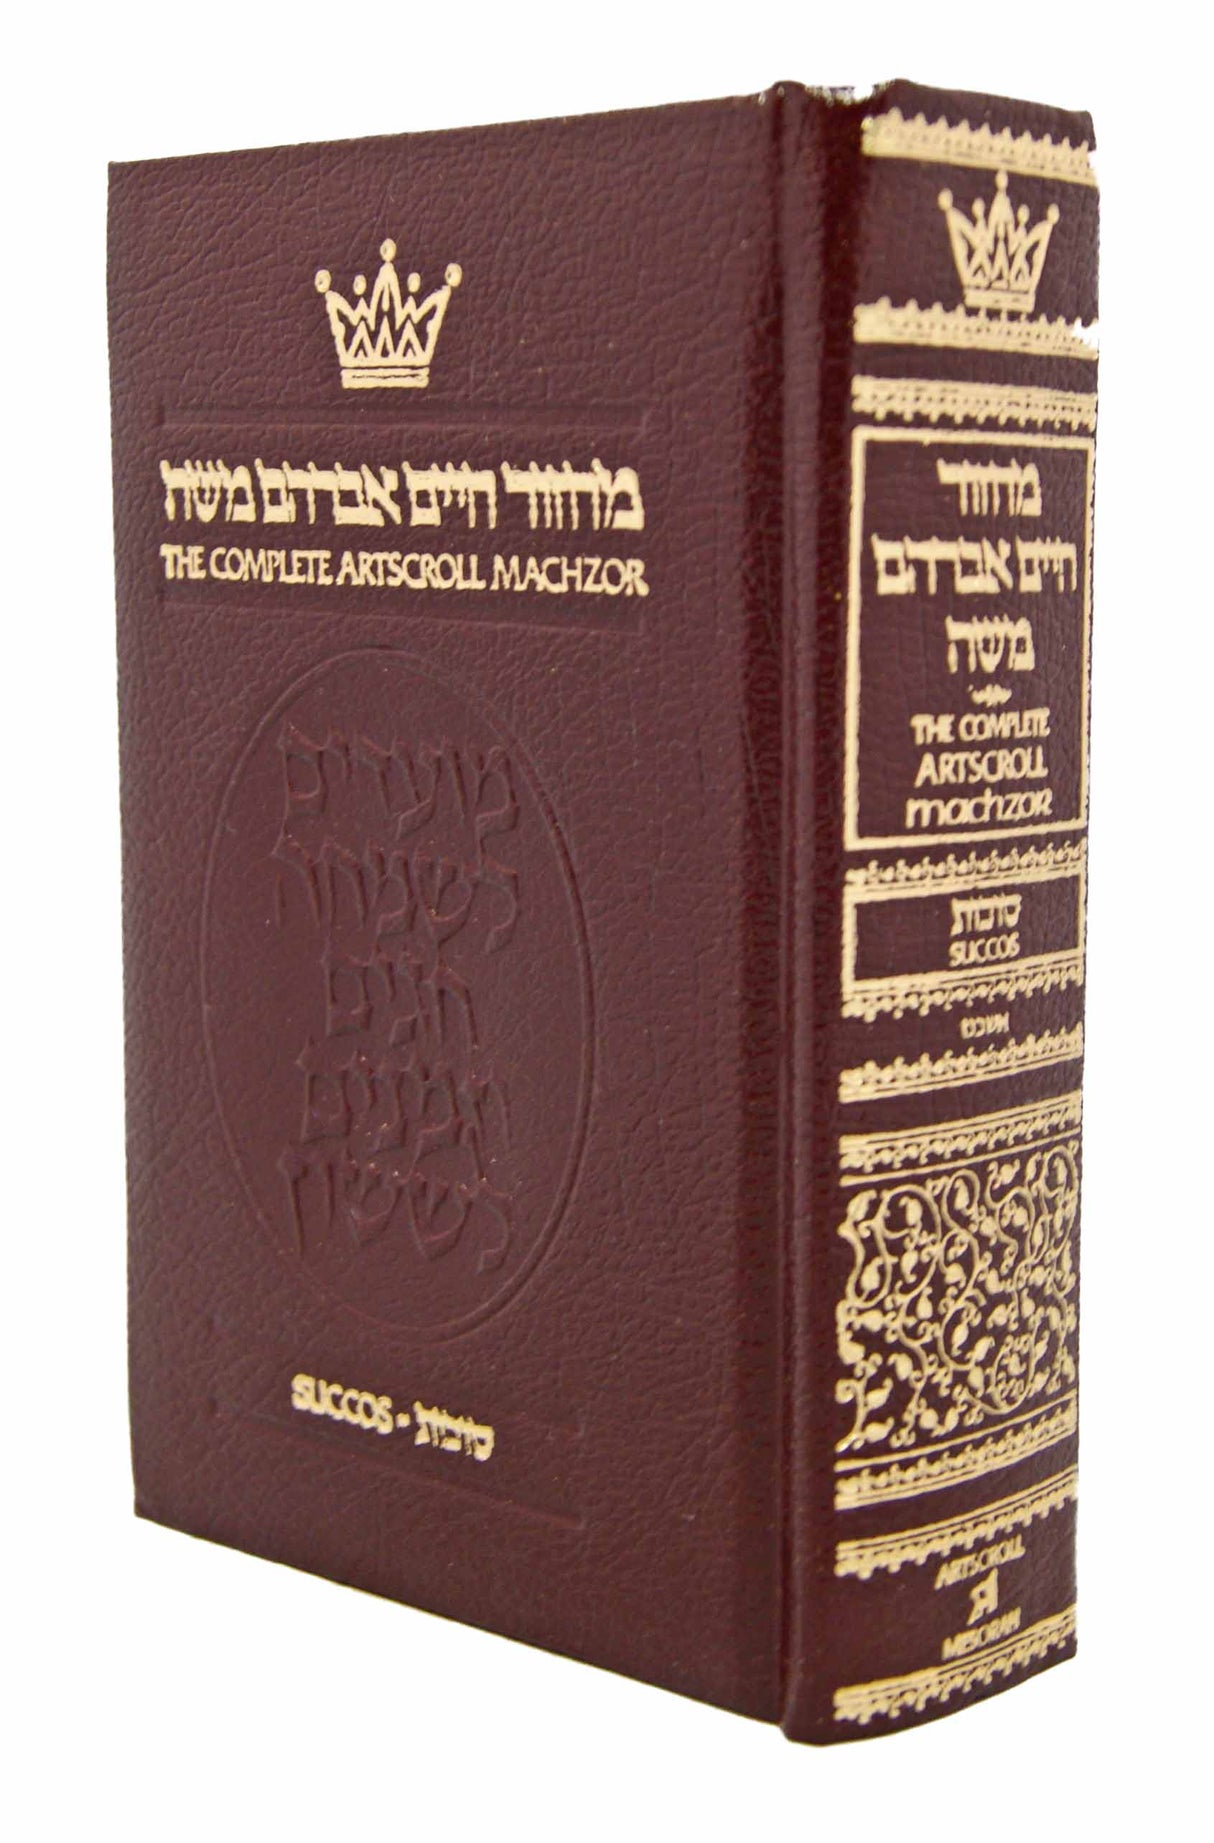 Artscroll: Machzor Succos Pocket Size Ashkenaz - Maroon Leather by Rabbi Avie Gold